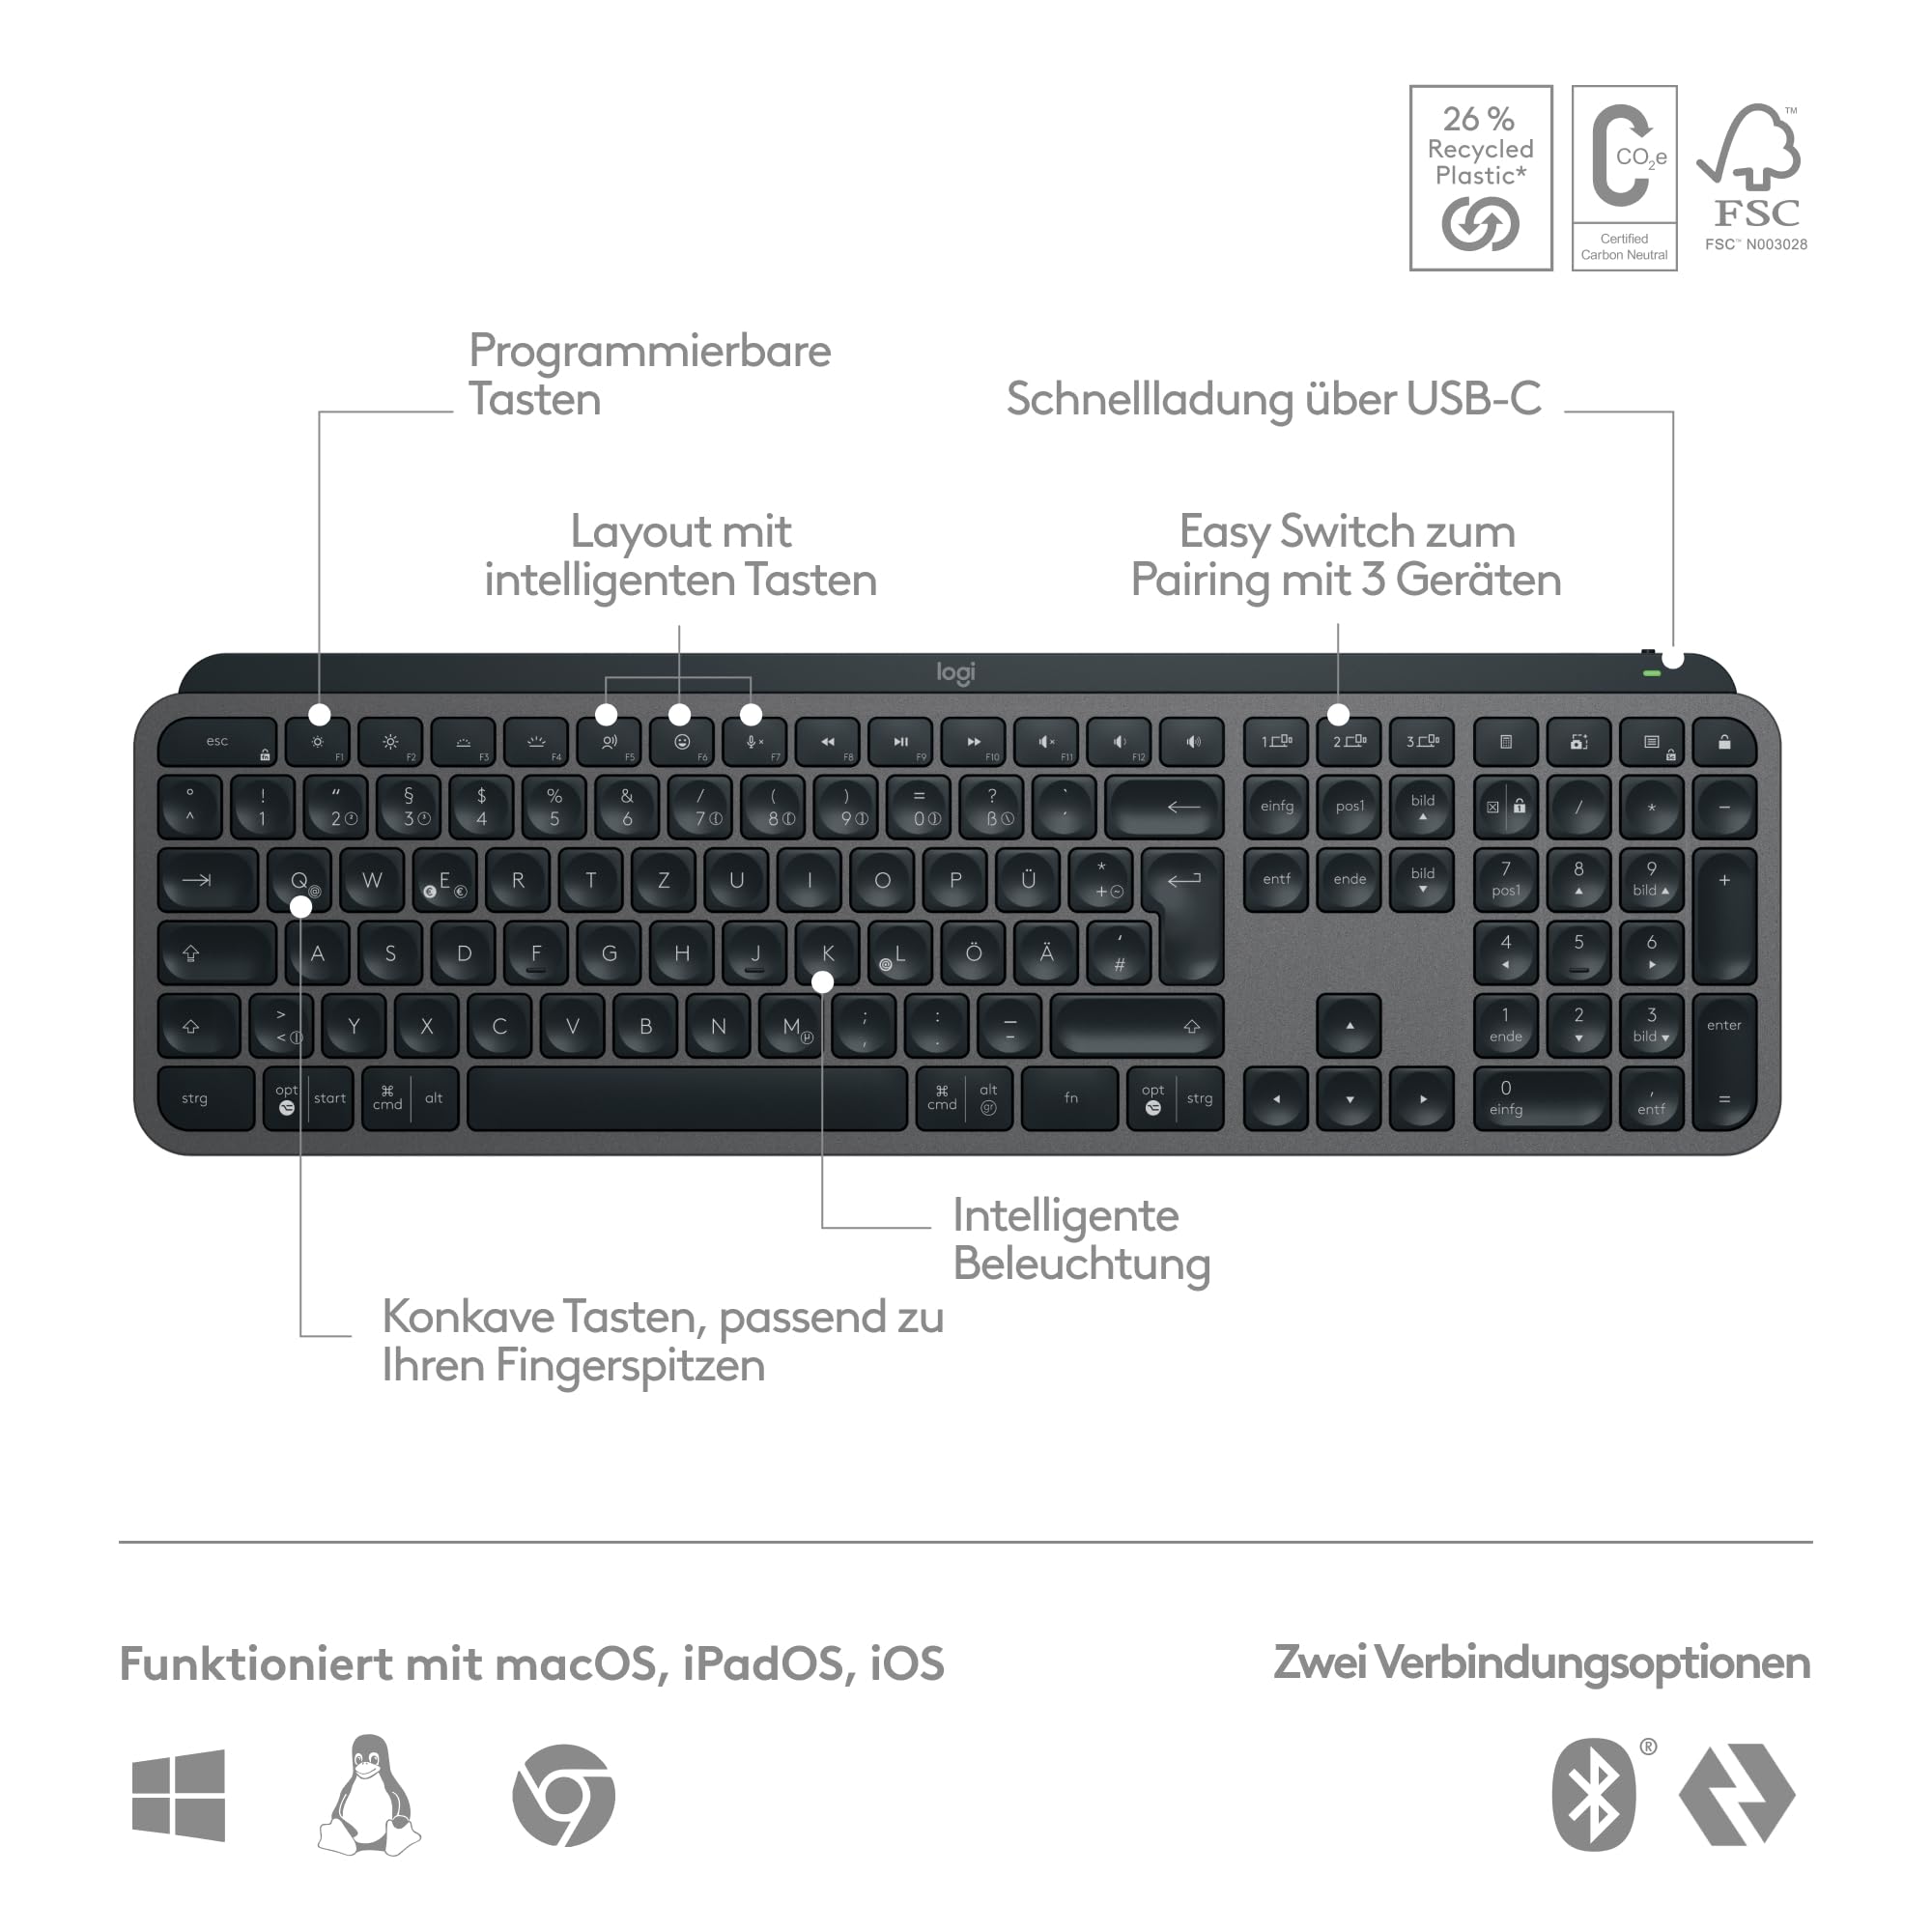 Logitech MX Keys S kabellose Tastatur, Low Profile, Precise Quiet Typing, Programmable Keys, Backlighting, Bluetooth, Rechargeable, für Windows PC/Linux/Chrome/Mac - Graphit, Deutsches QWERTZ-Layout